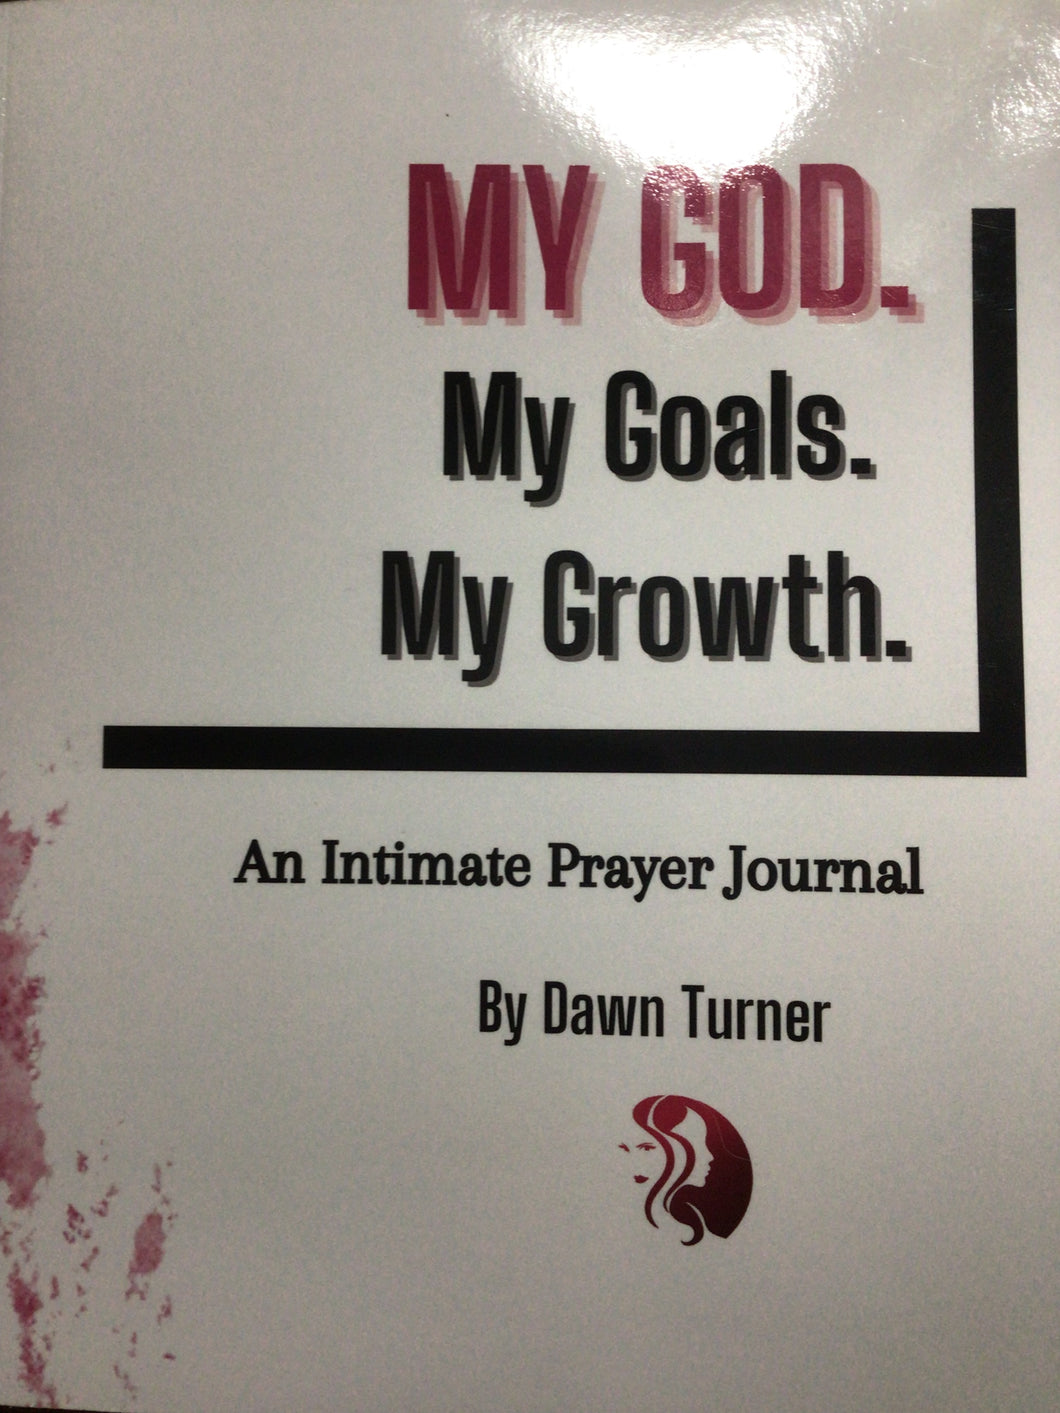 My God. My Goals. My Growth. Journal